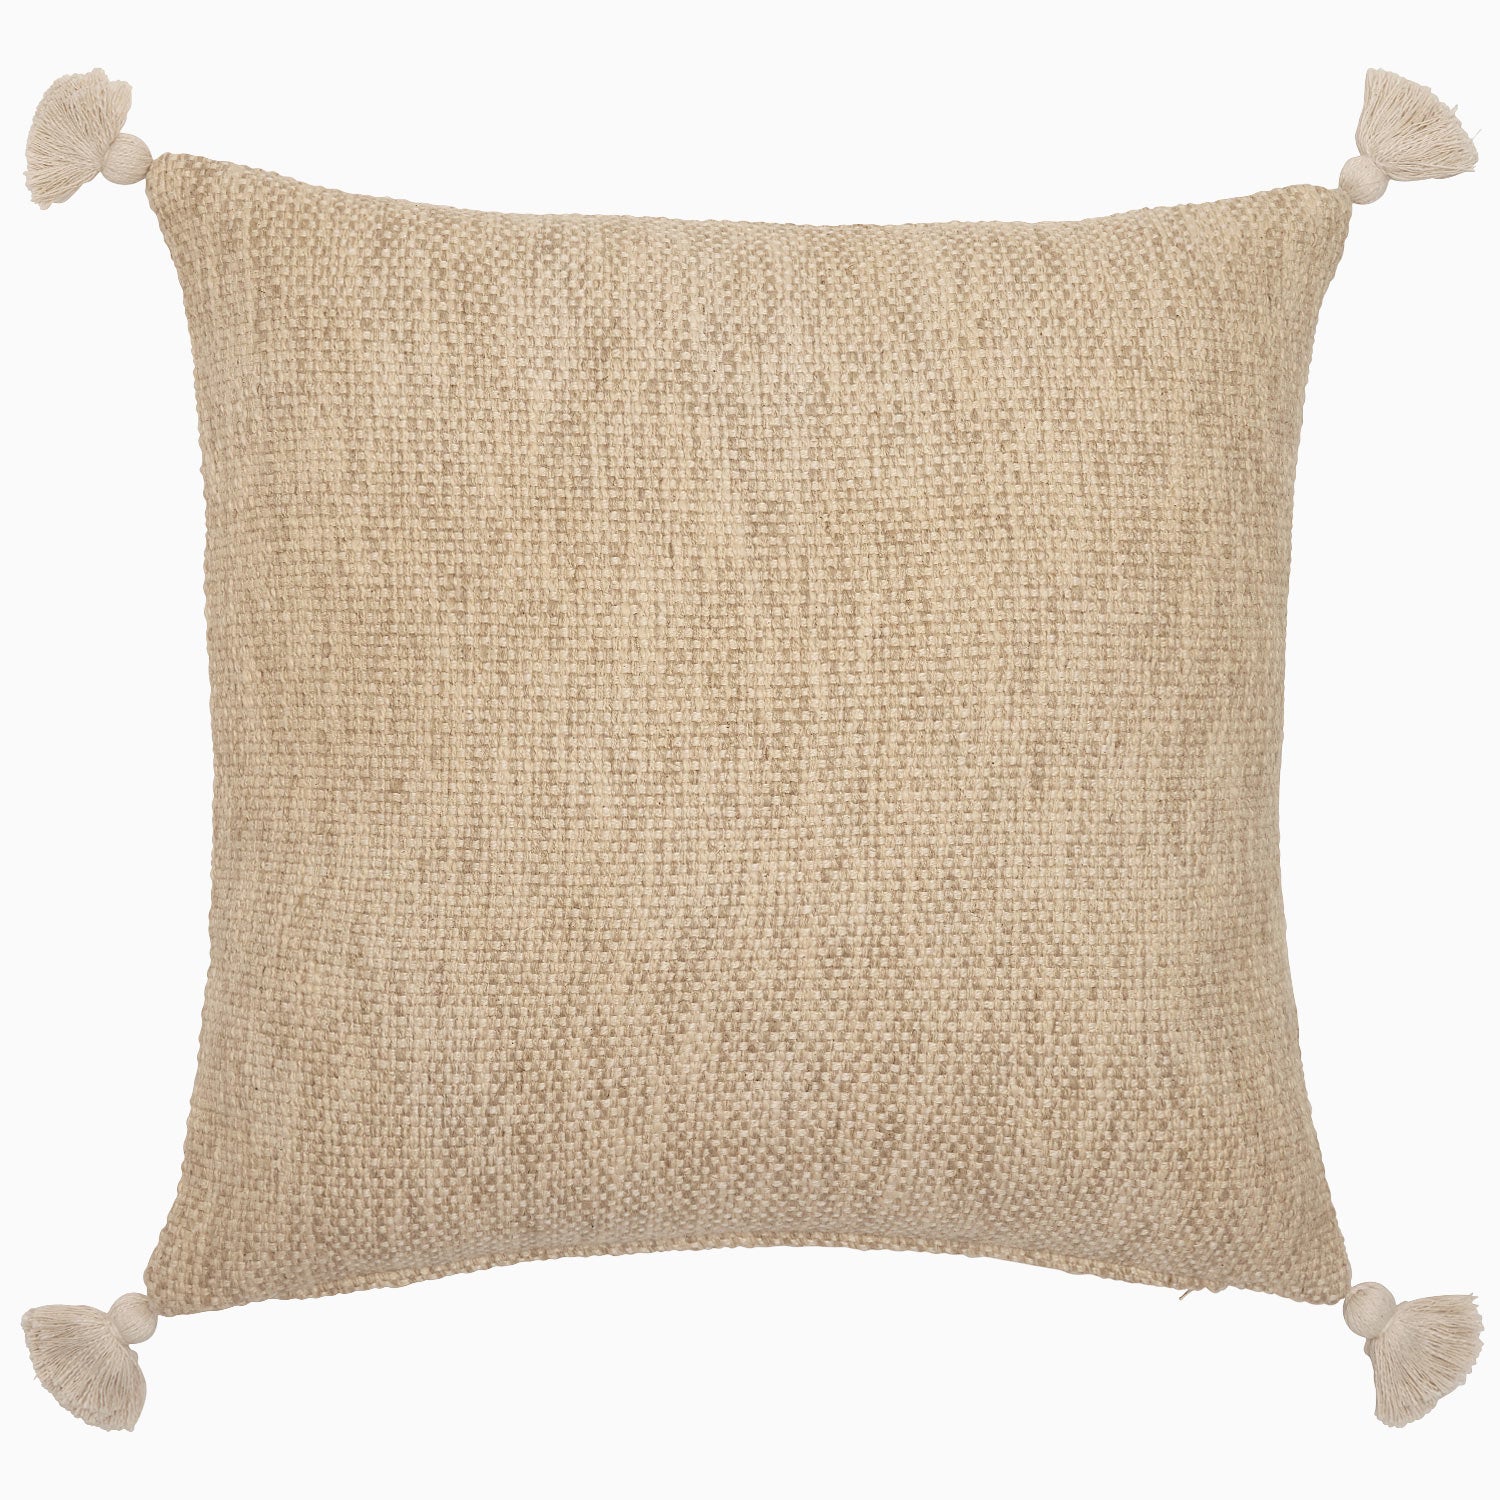 Woven Sand Decorative Pillow Main